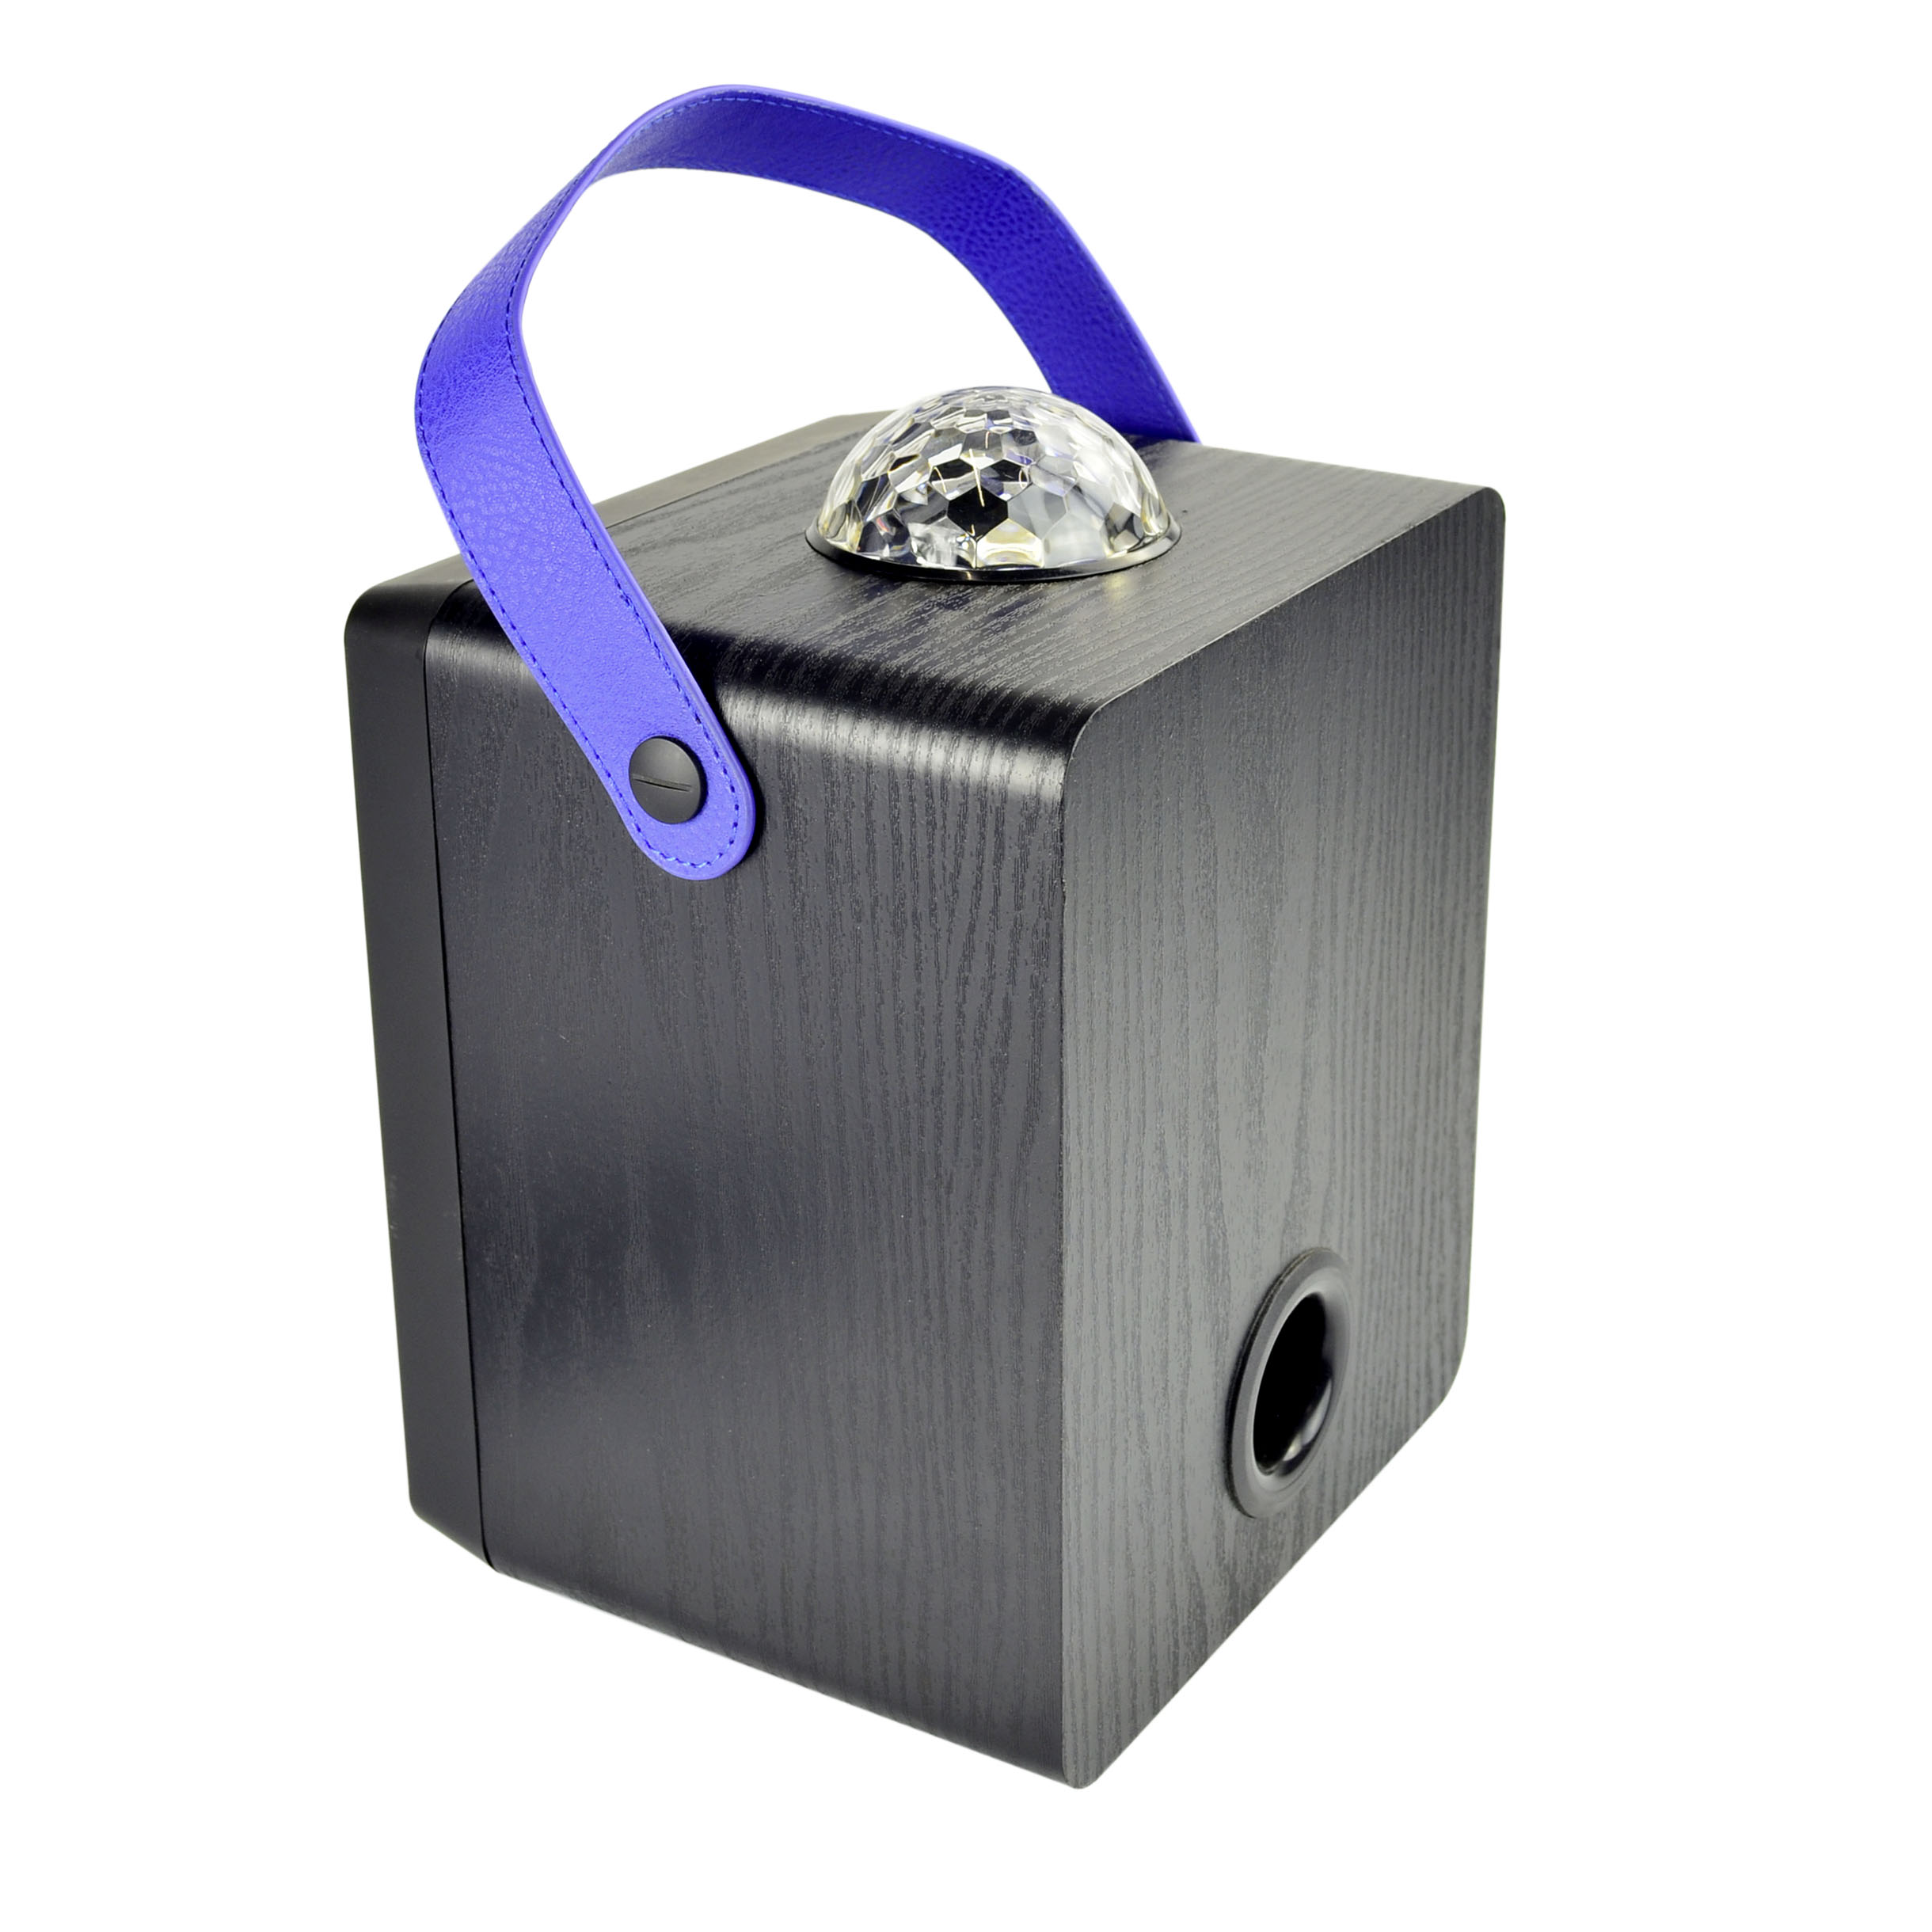 X4-TECH Rockstar Bluetooth-Diskolicht-Lautsprecher / 20W RMS / 4000mAh / Powerbank, USB